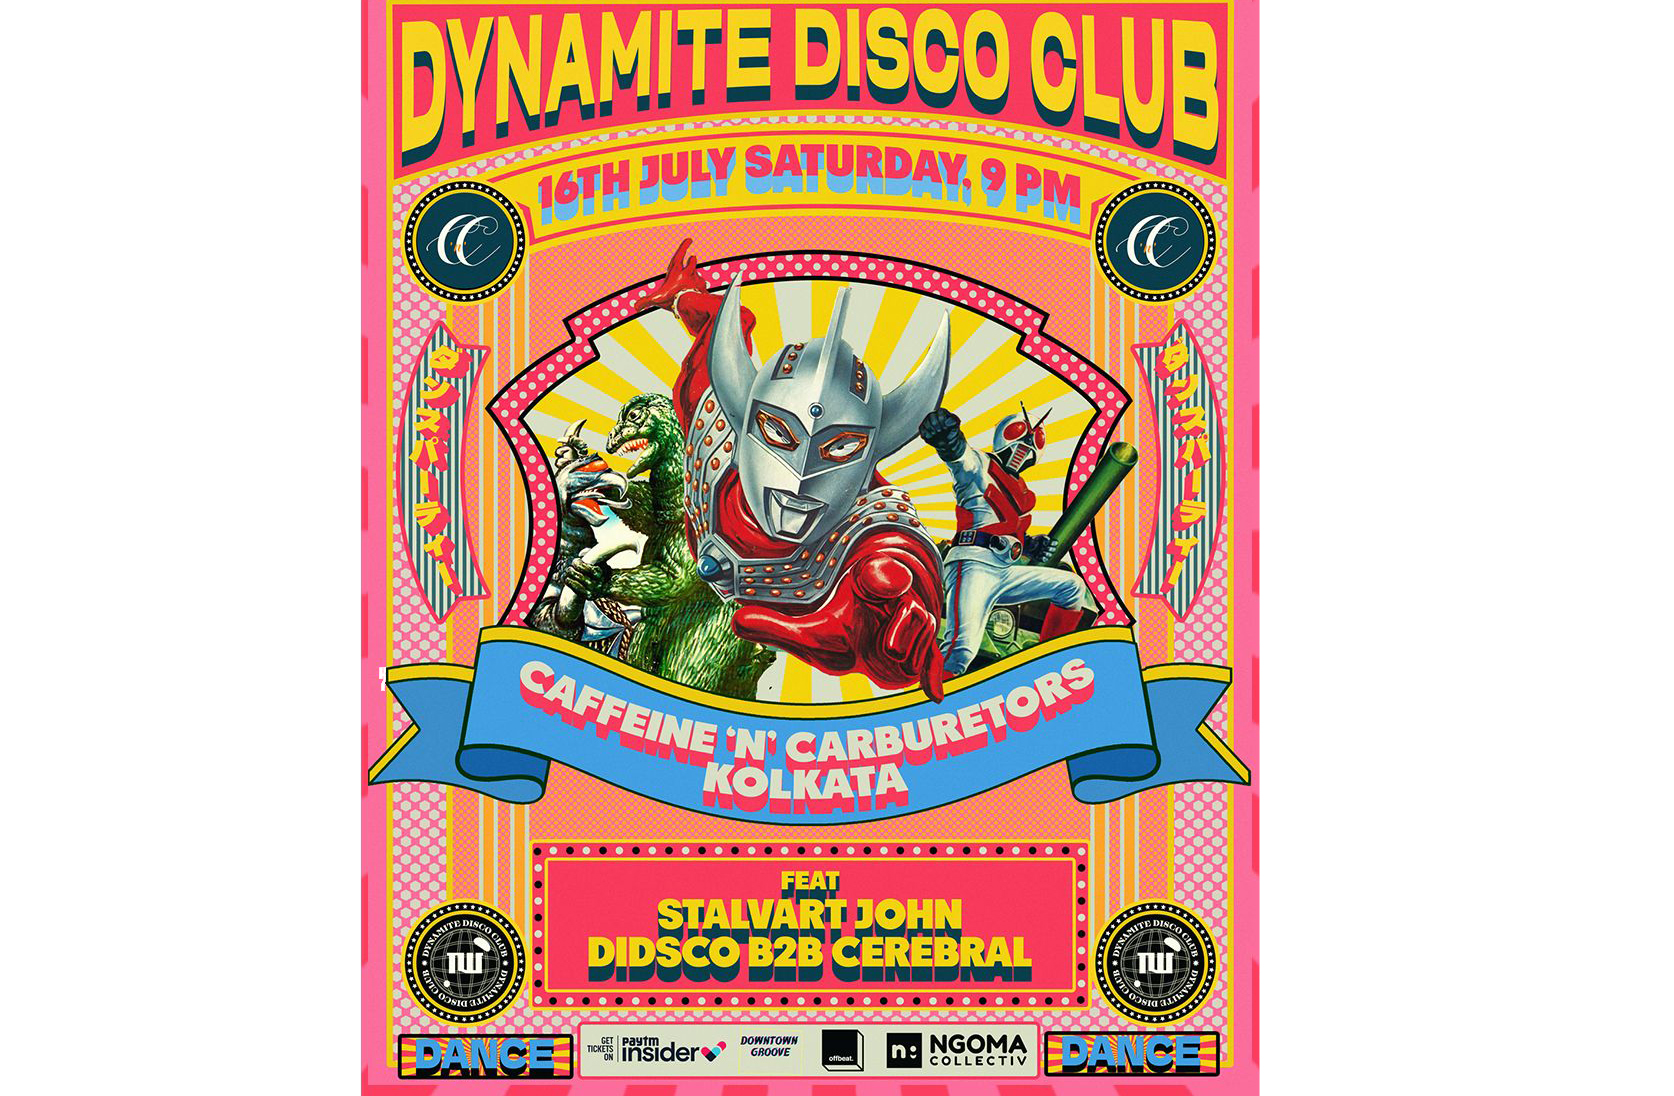 Dynamite Disco Club to perform at Caffeine ‘n’ Carburetors, brings the ‘Dynamite’ vibe to Kolkata